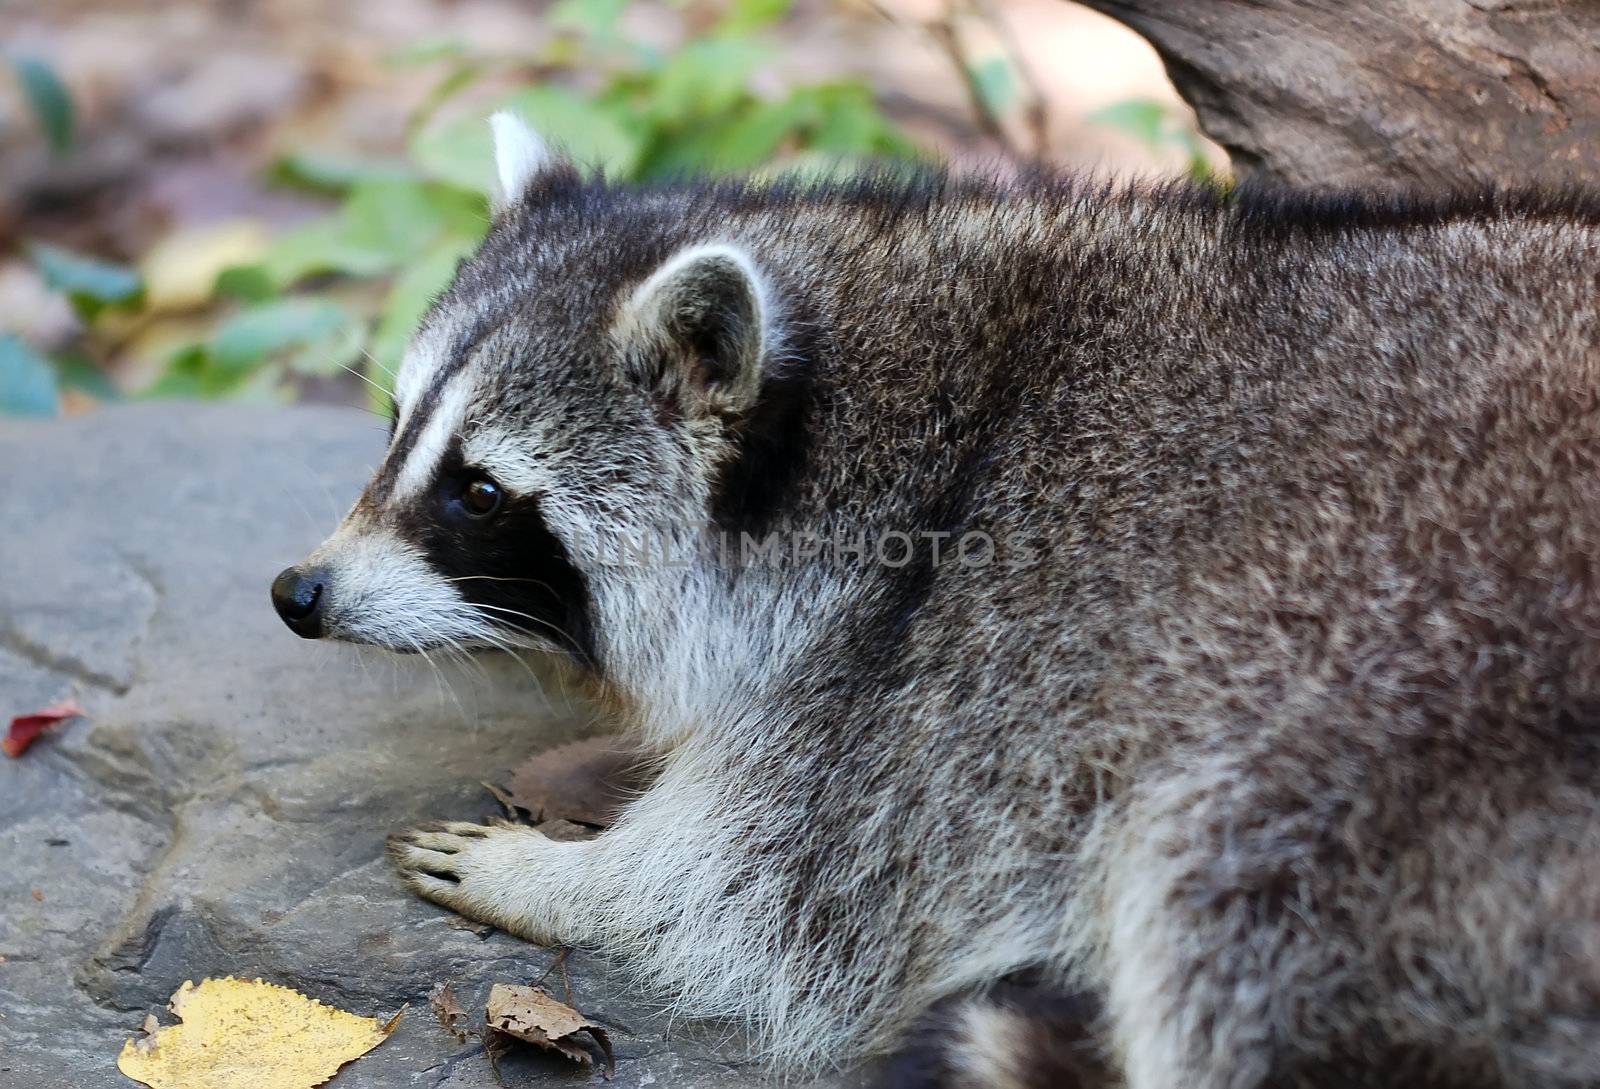 Common Raccoon (Procyon lotor) by nialat